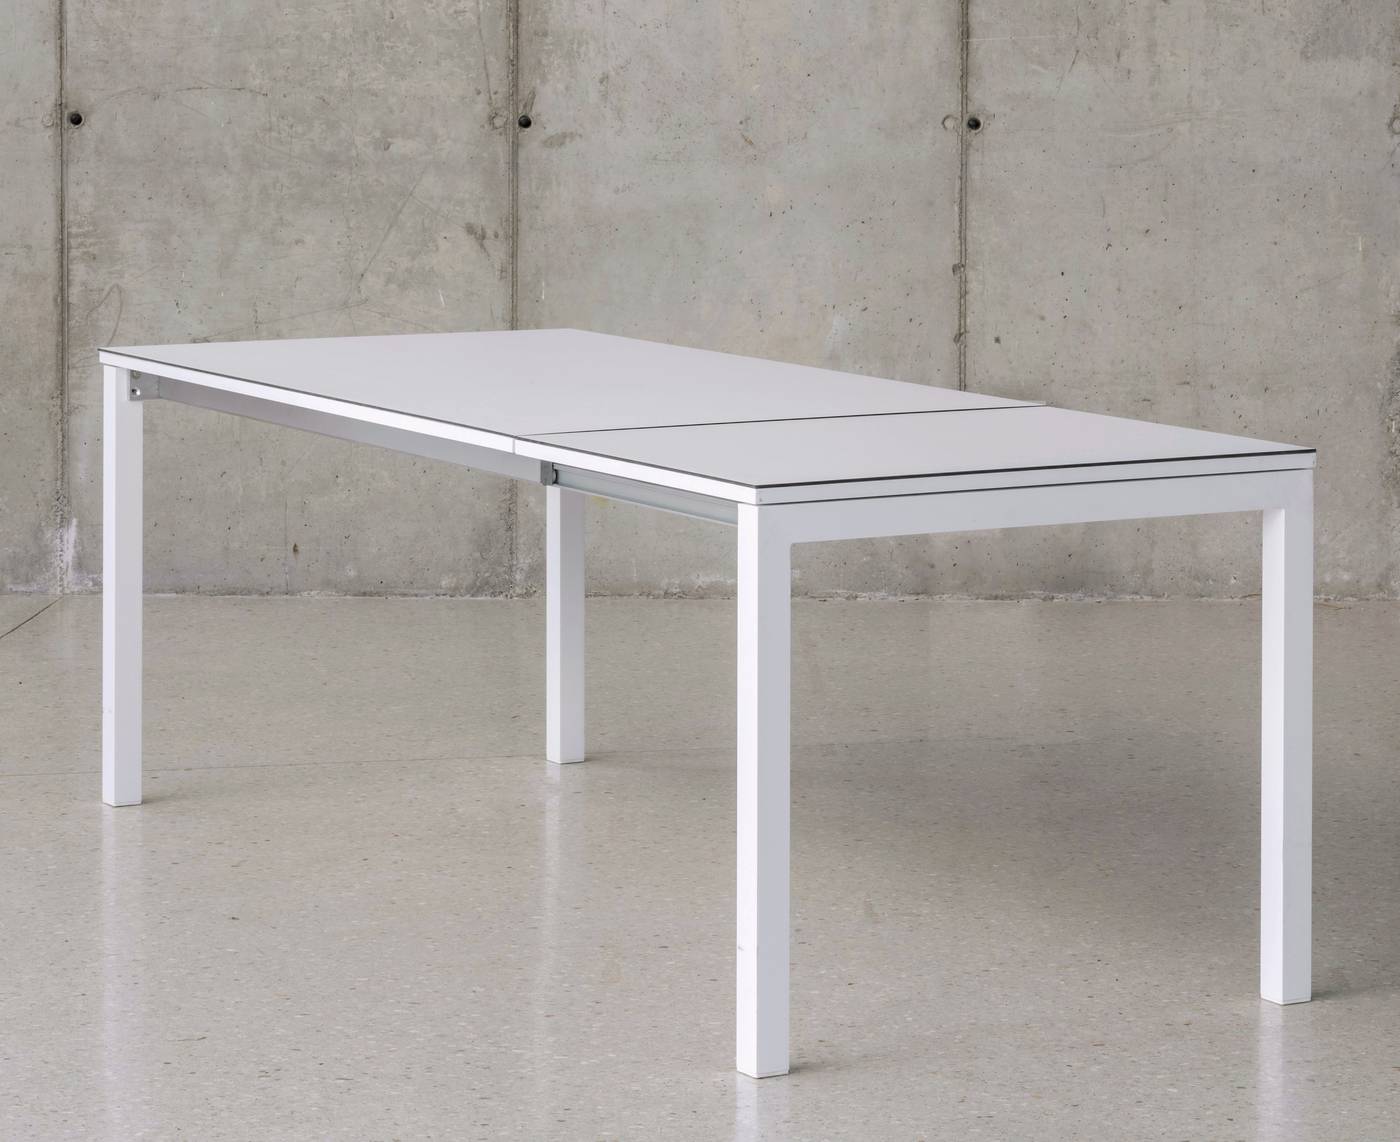 Set Aluminio Singapur-Córcega 215-6 - Conjunto de aluminio: mesa extensible con tablero HPL + 6 sillones de textilen. Disponible en color blanco o antracita.